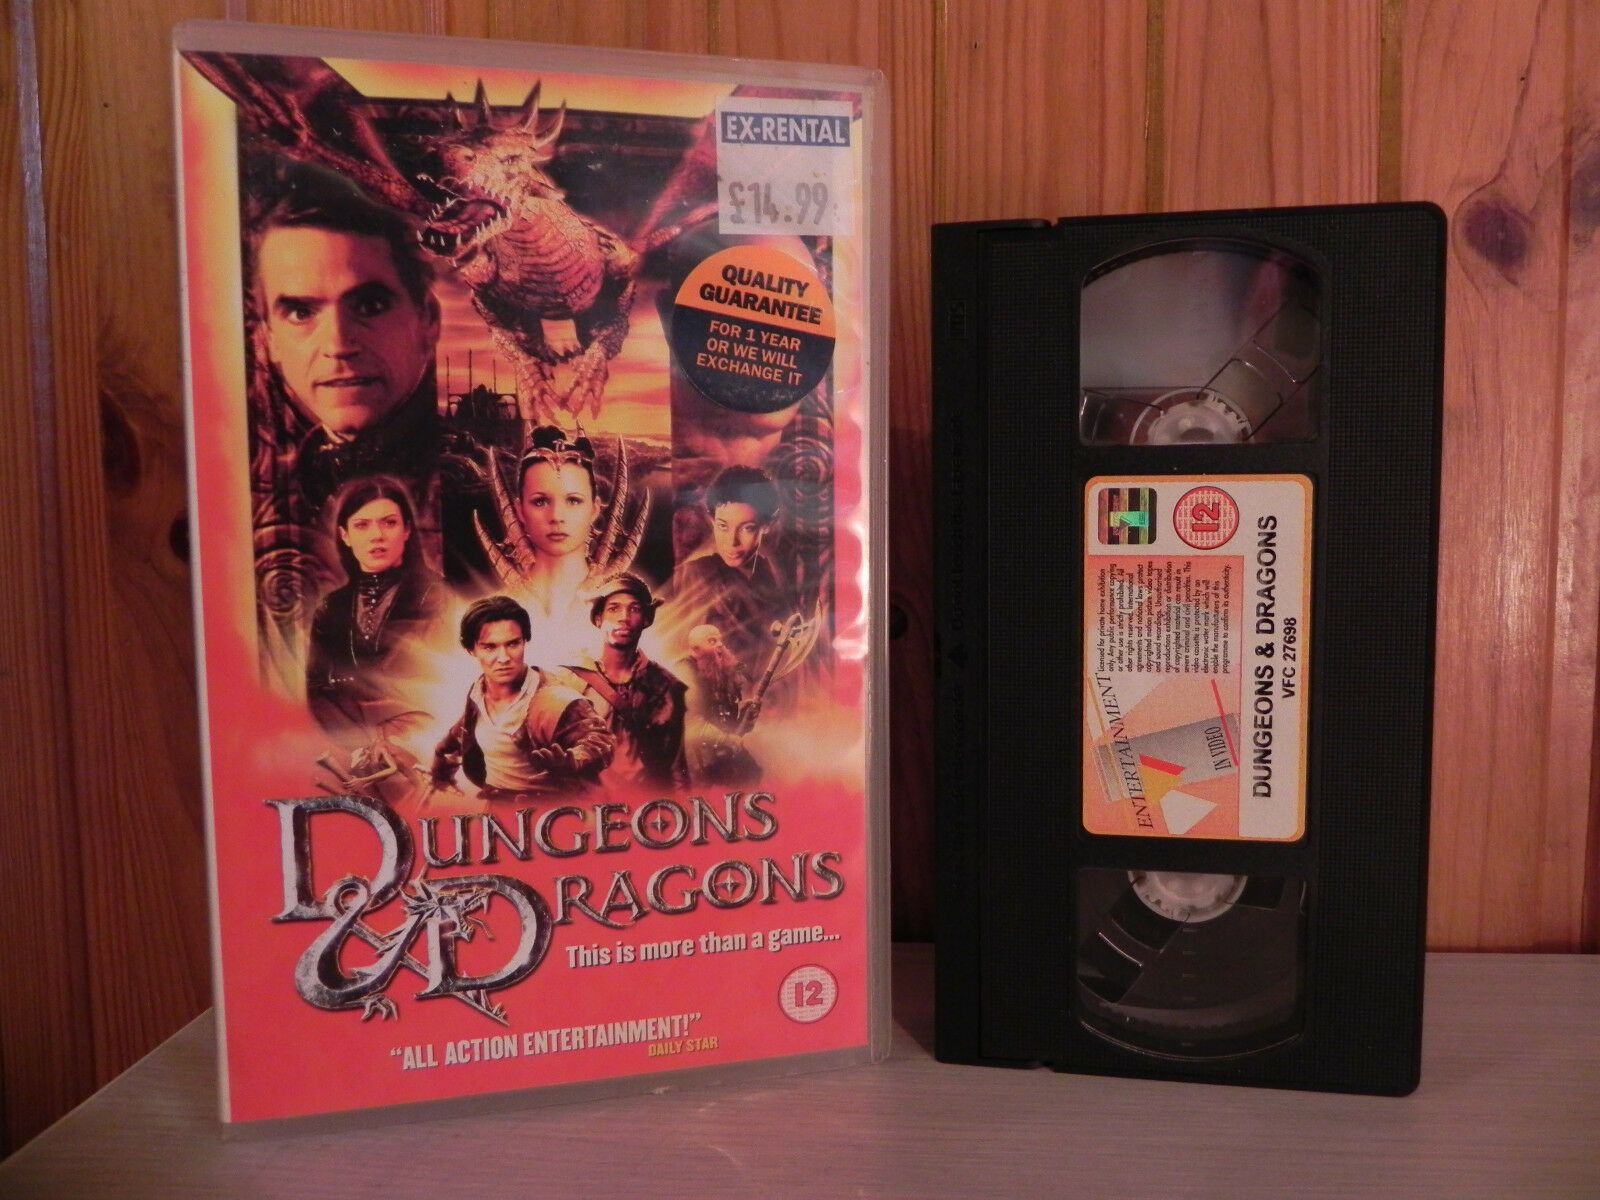 DUNGEONS AND DRAGONS - Supernatural Fantasy - Top Movie/Big Box - ExRental - VHS-